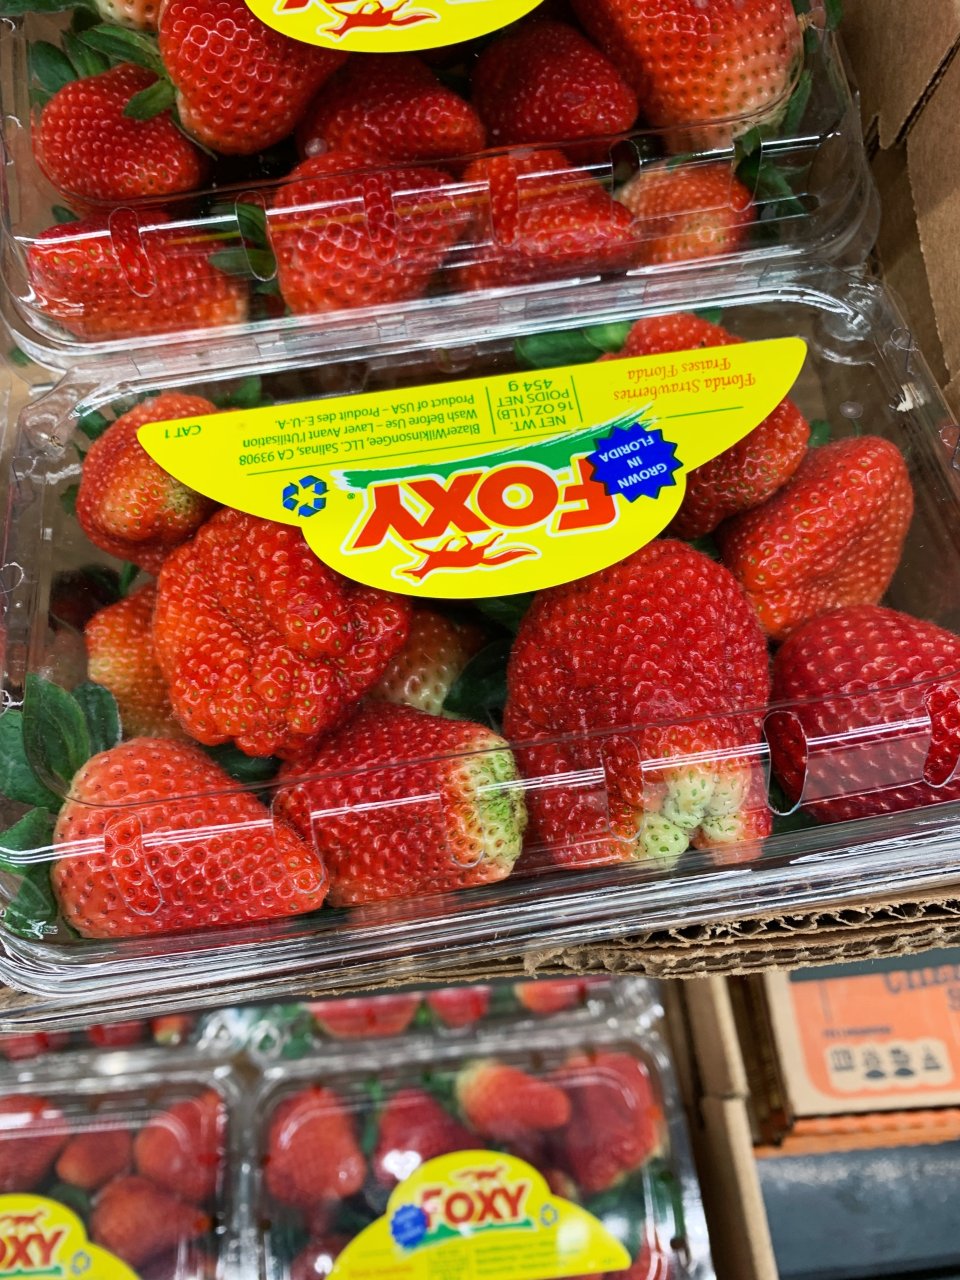 📣Aldi无敌新鲜草莓🍓💰$1.99...